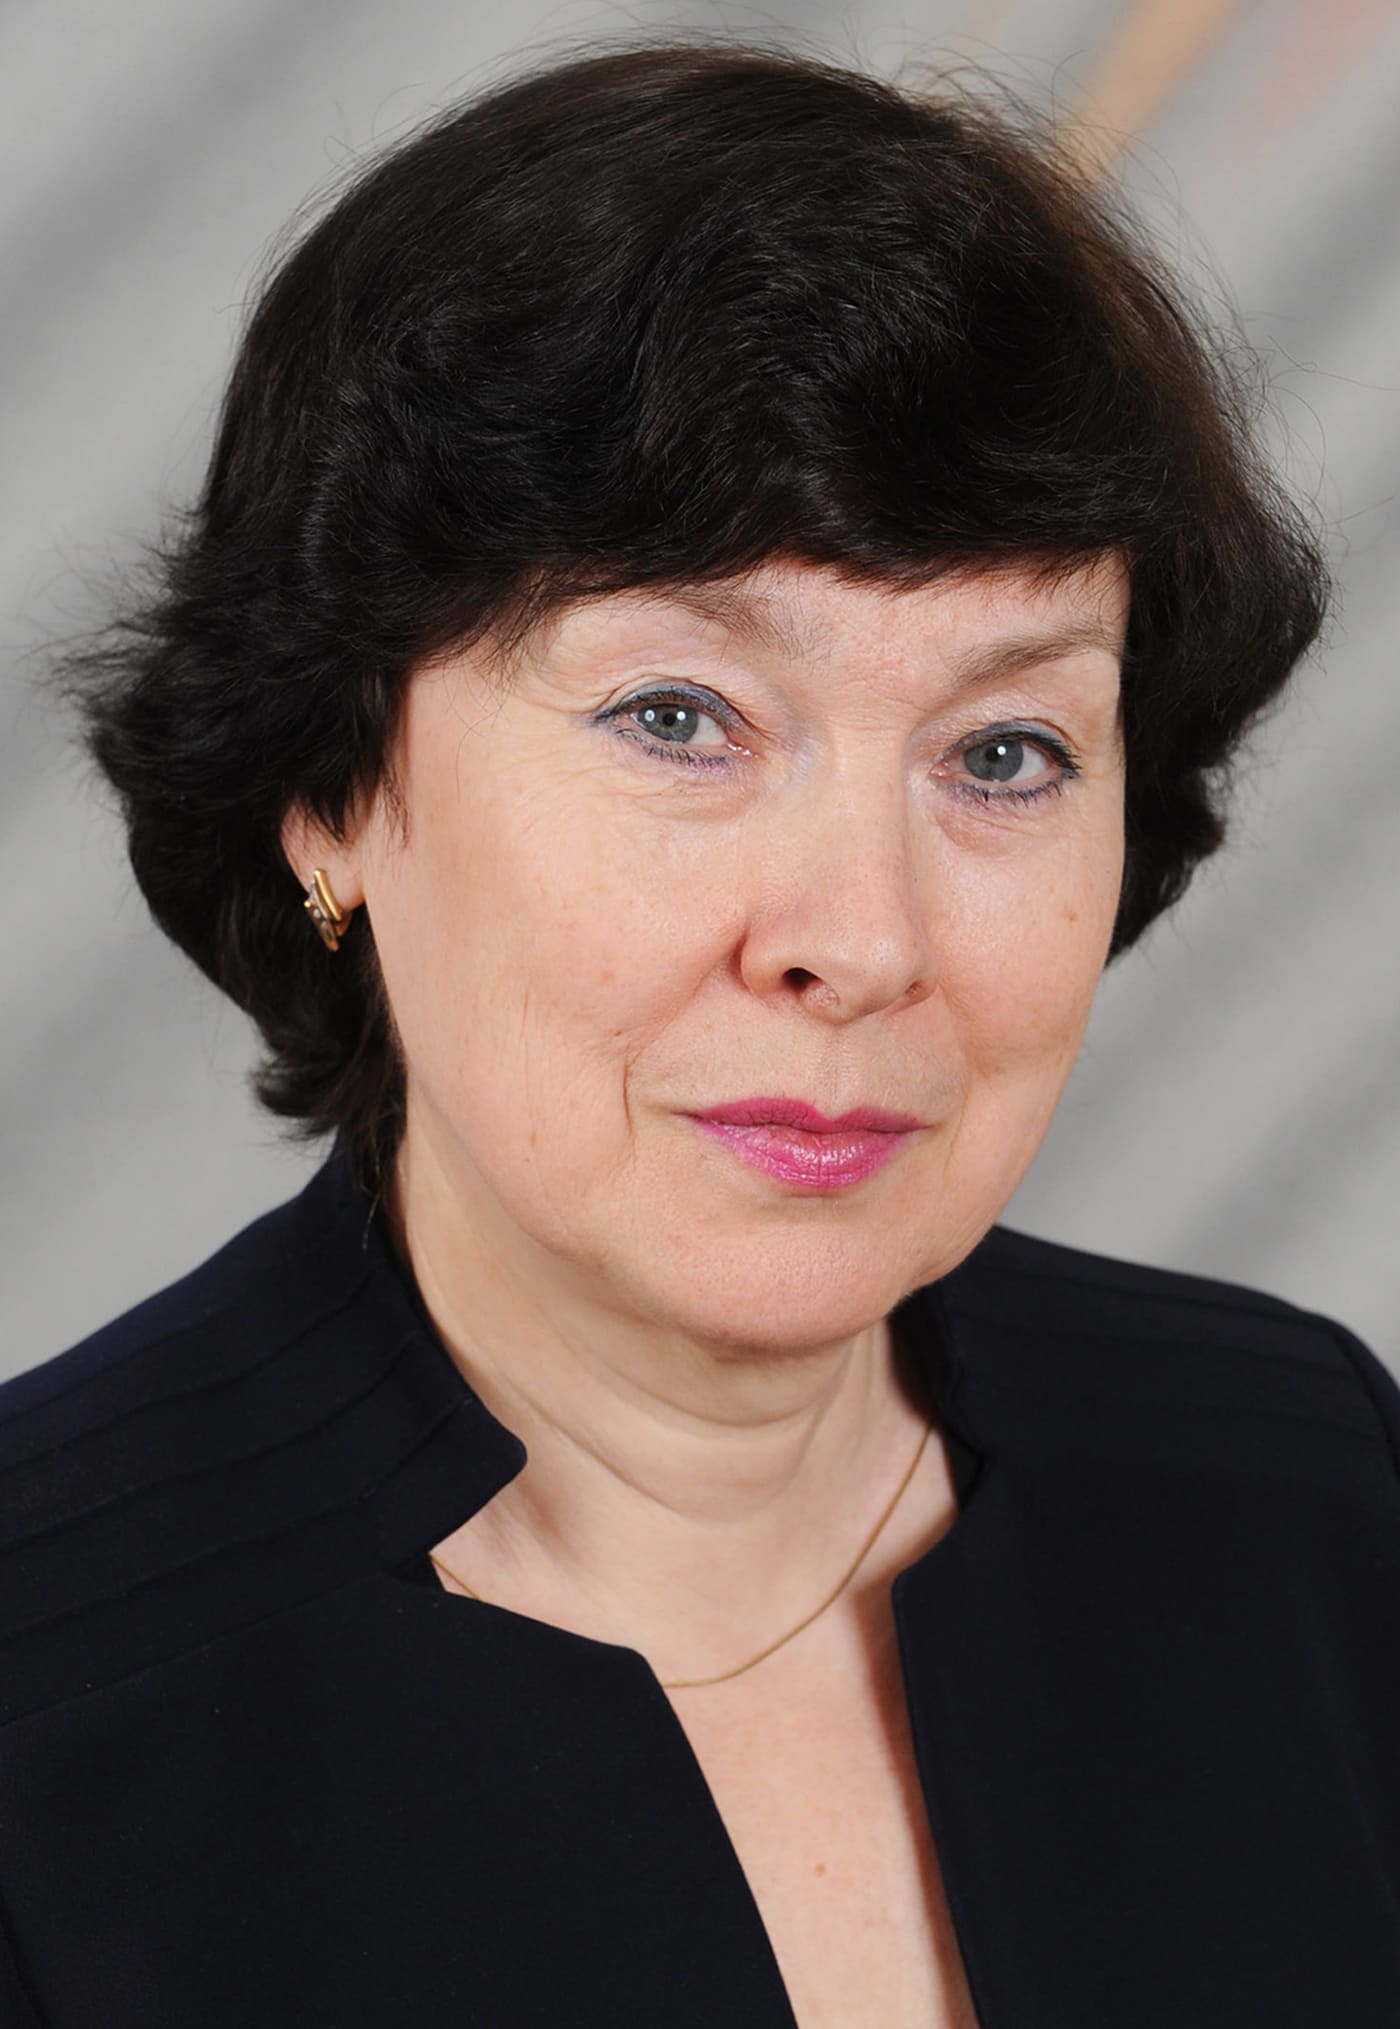 Ширстова Ирина Вениаминовна- лектор, учитель математики, директор (1983-1985 гг.)